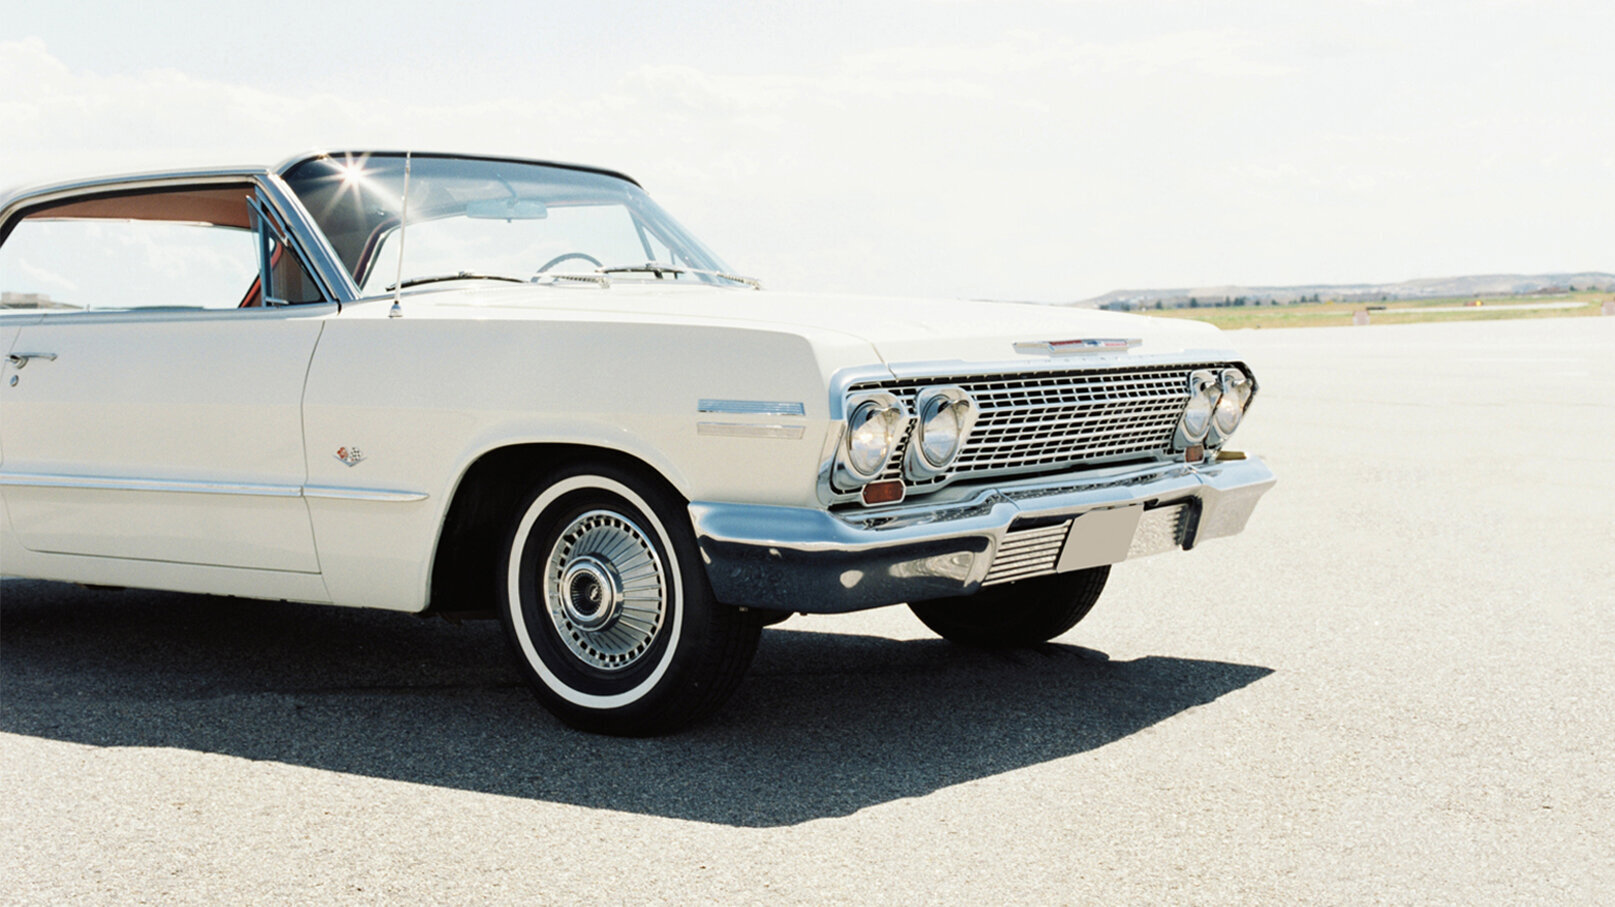 1963 Chevy Impala Homepage Image 02